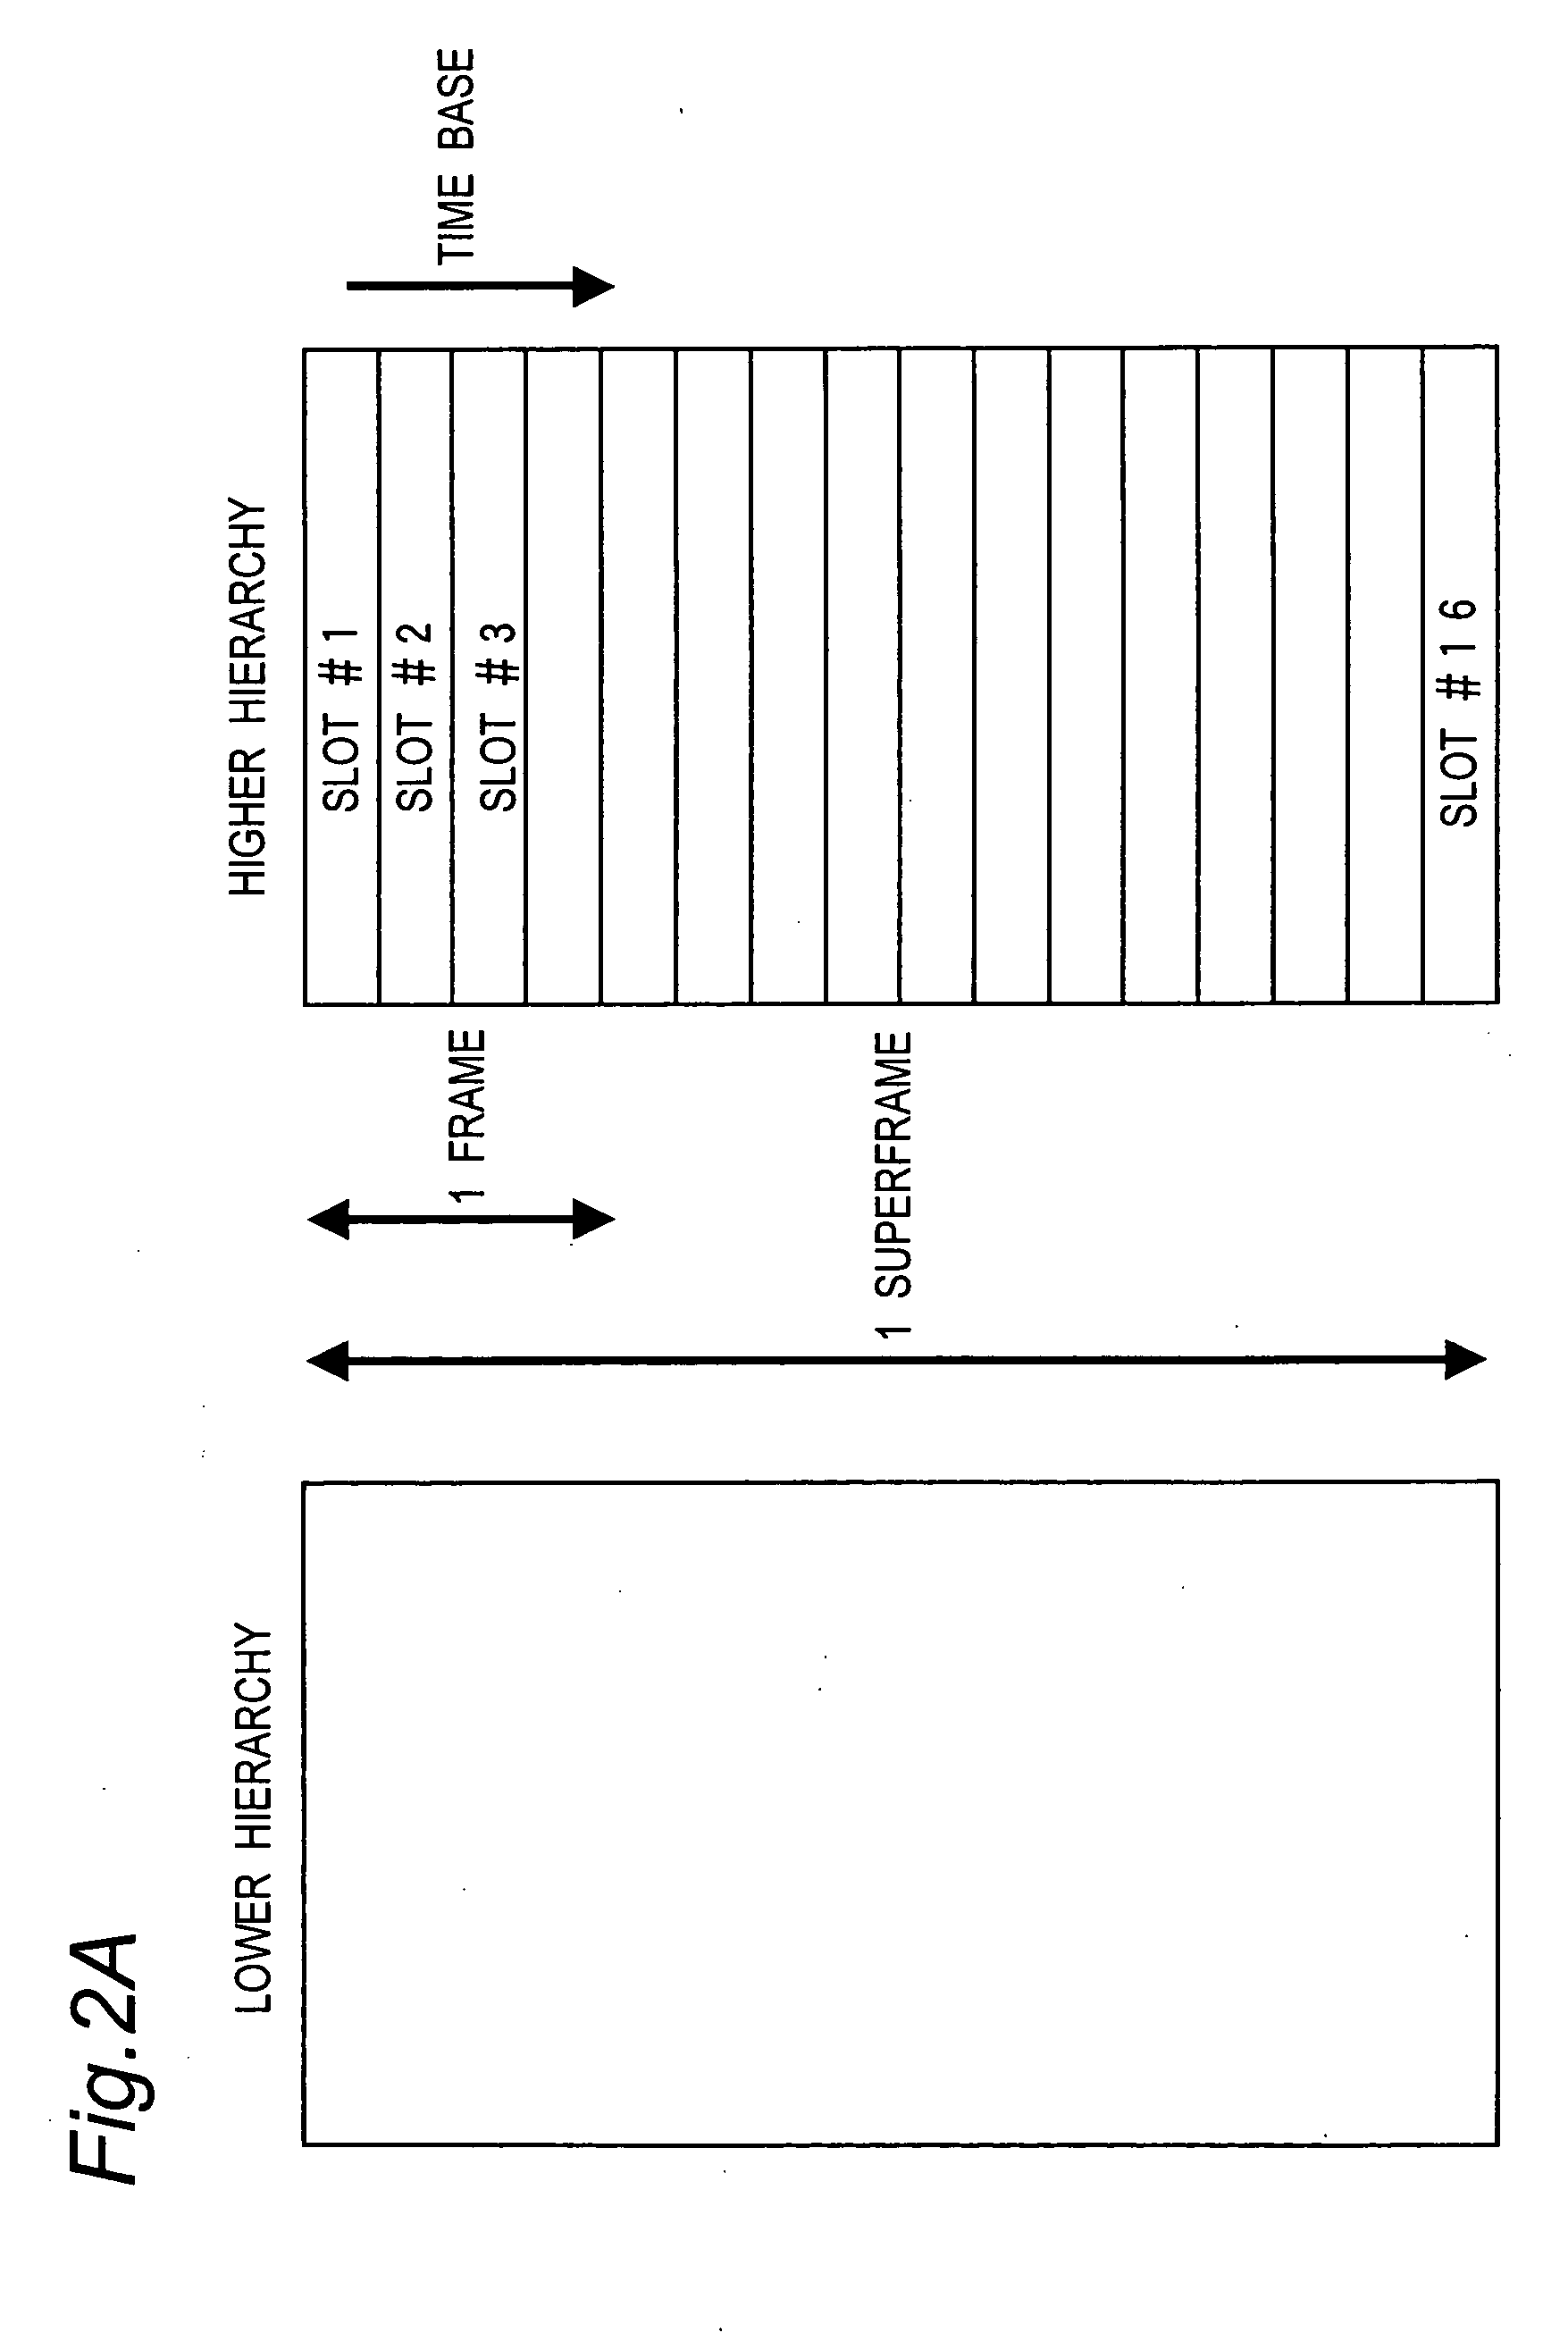 Ofdm signal transmission method, transmission apparatus, and reception apparatus